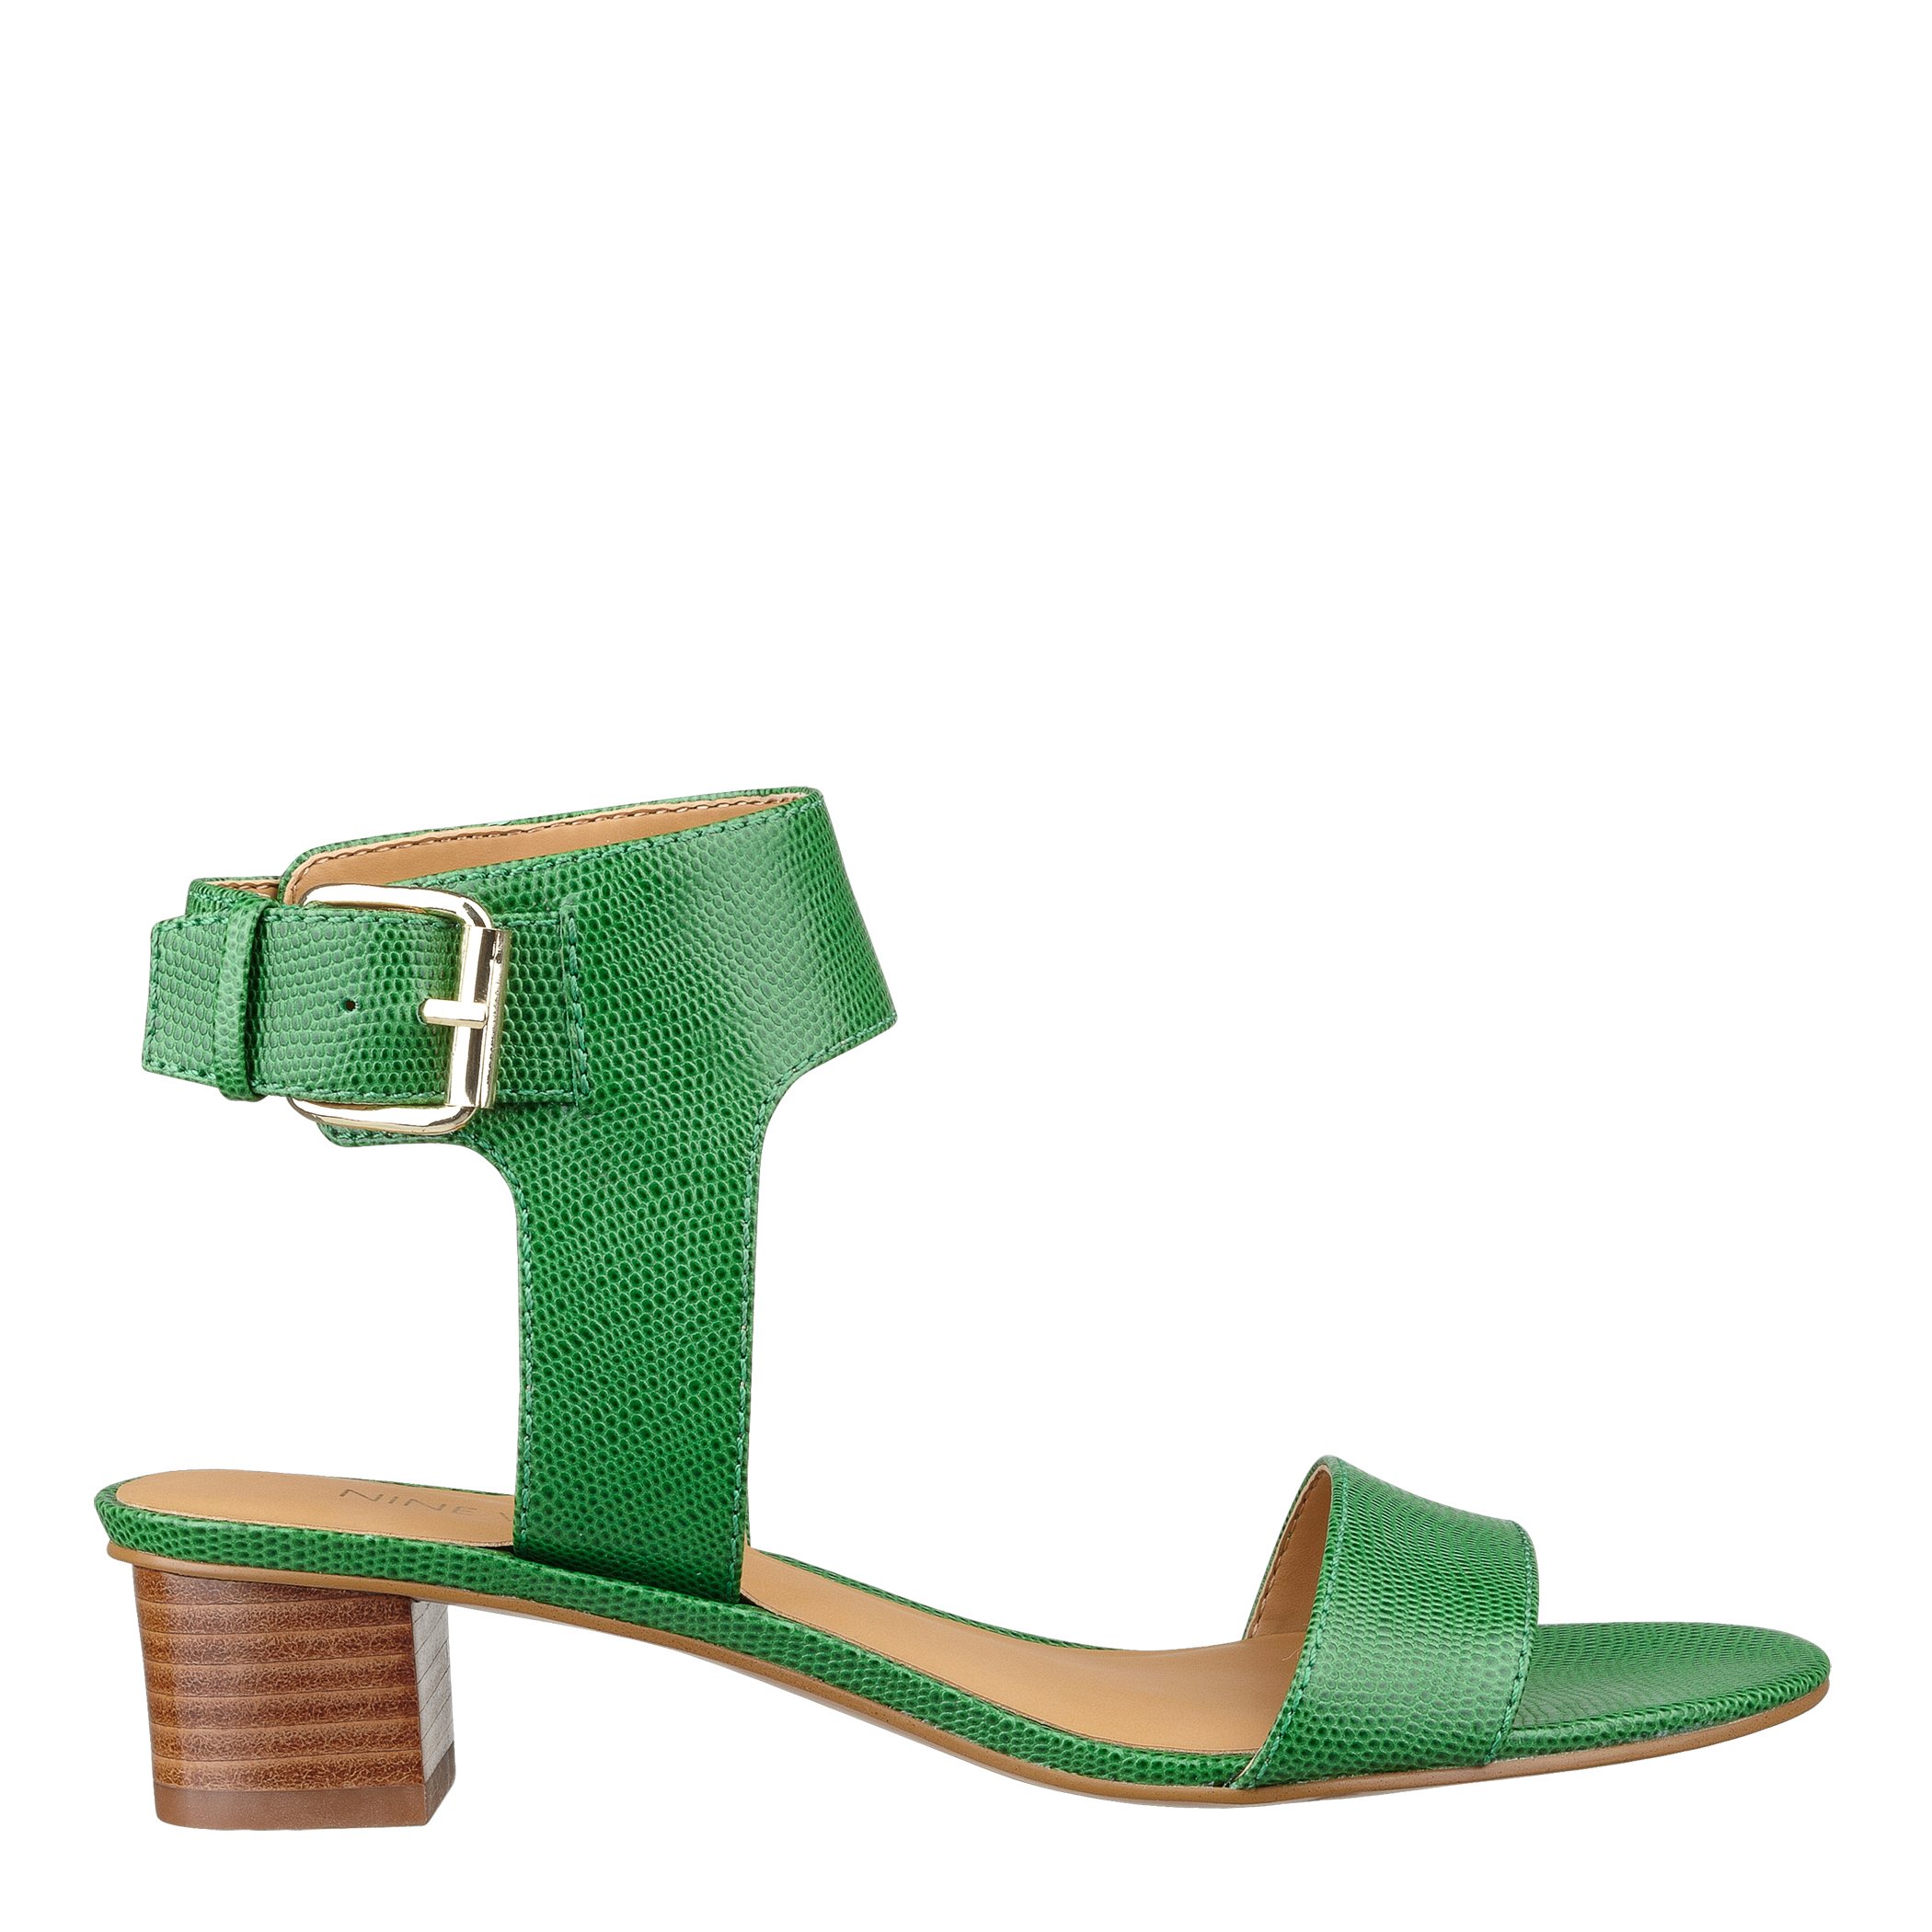 Nine West Tasha Open-toe Ankle-strap Sandals Sandal in Green Leather